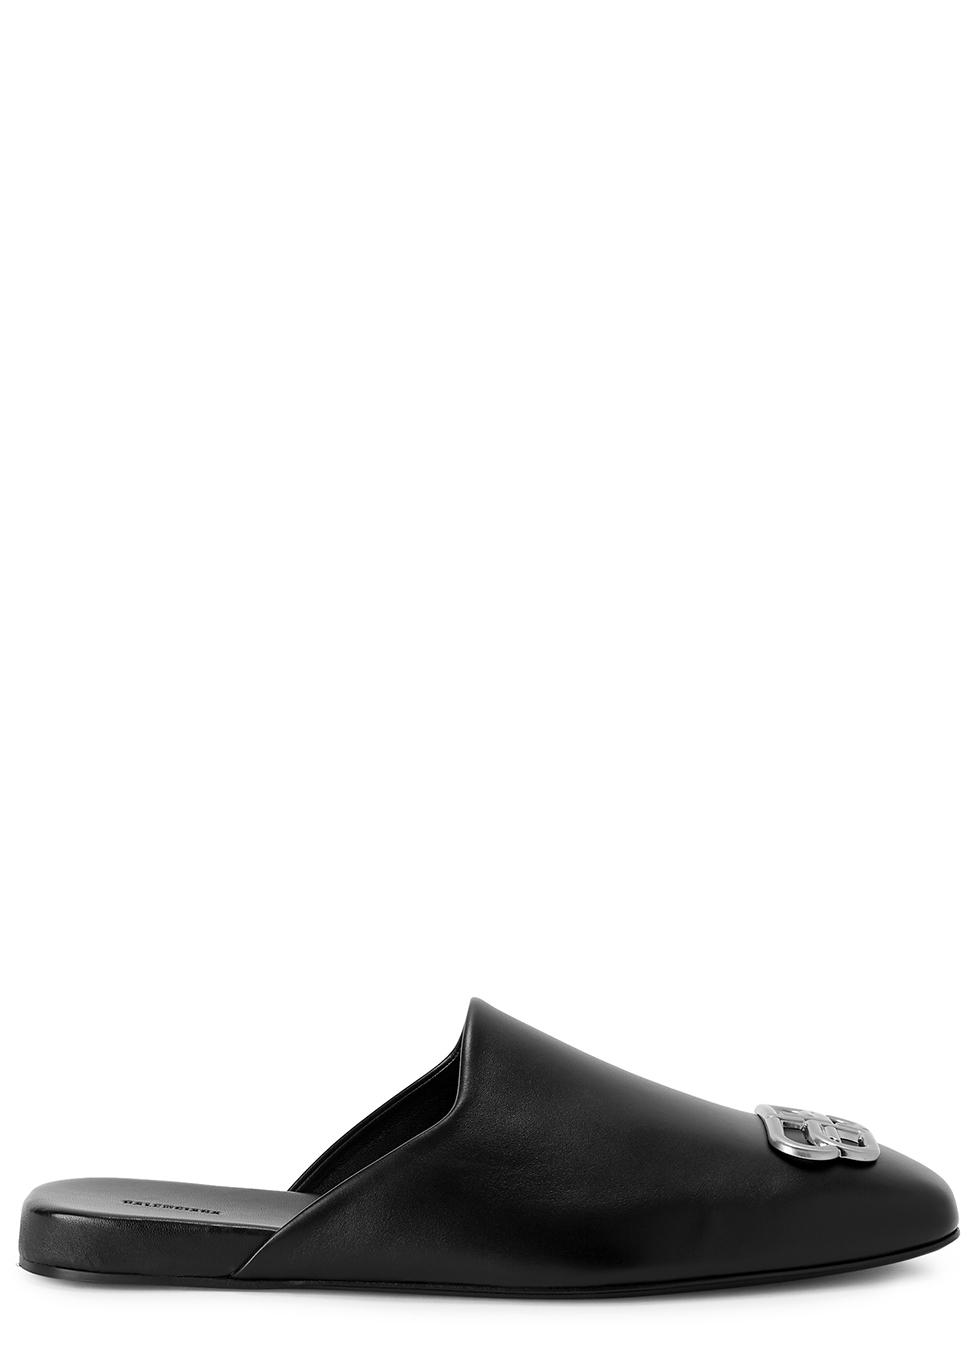 Balenciaga Bb Black Logo Leather Mules for Men | Lyst